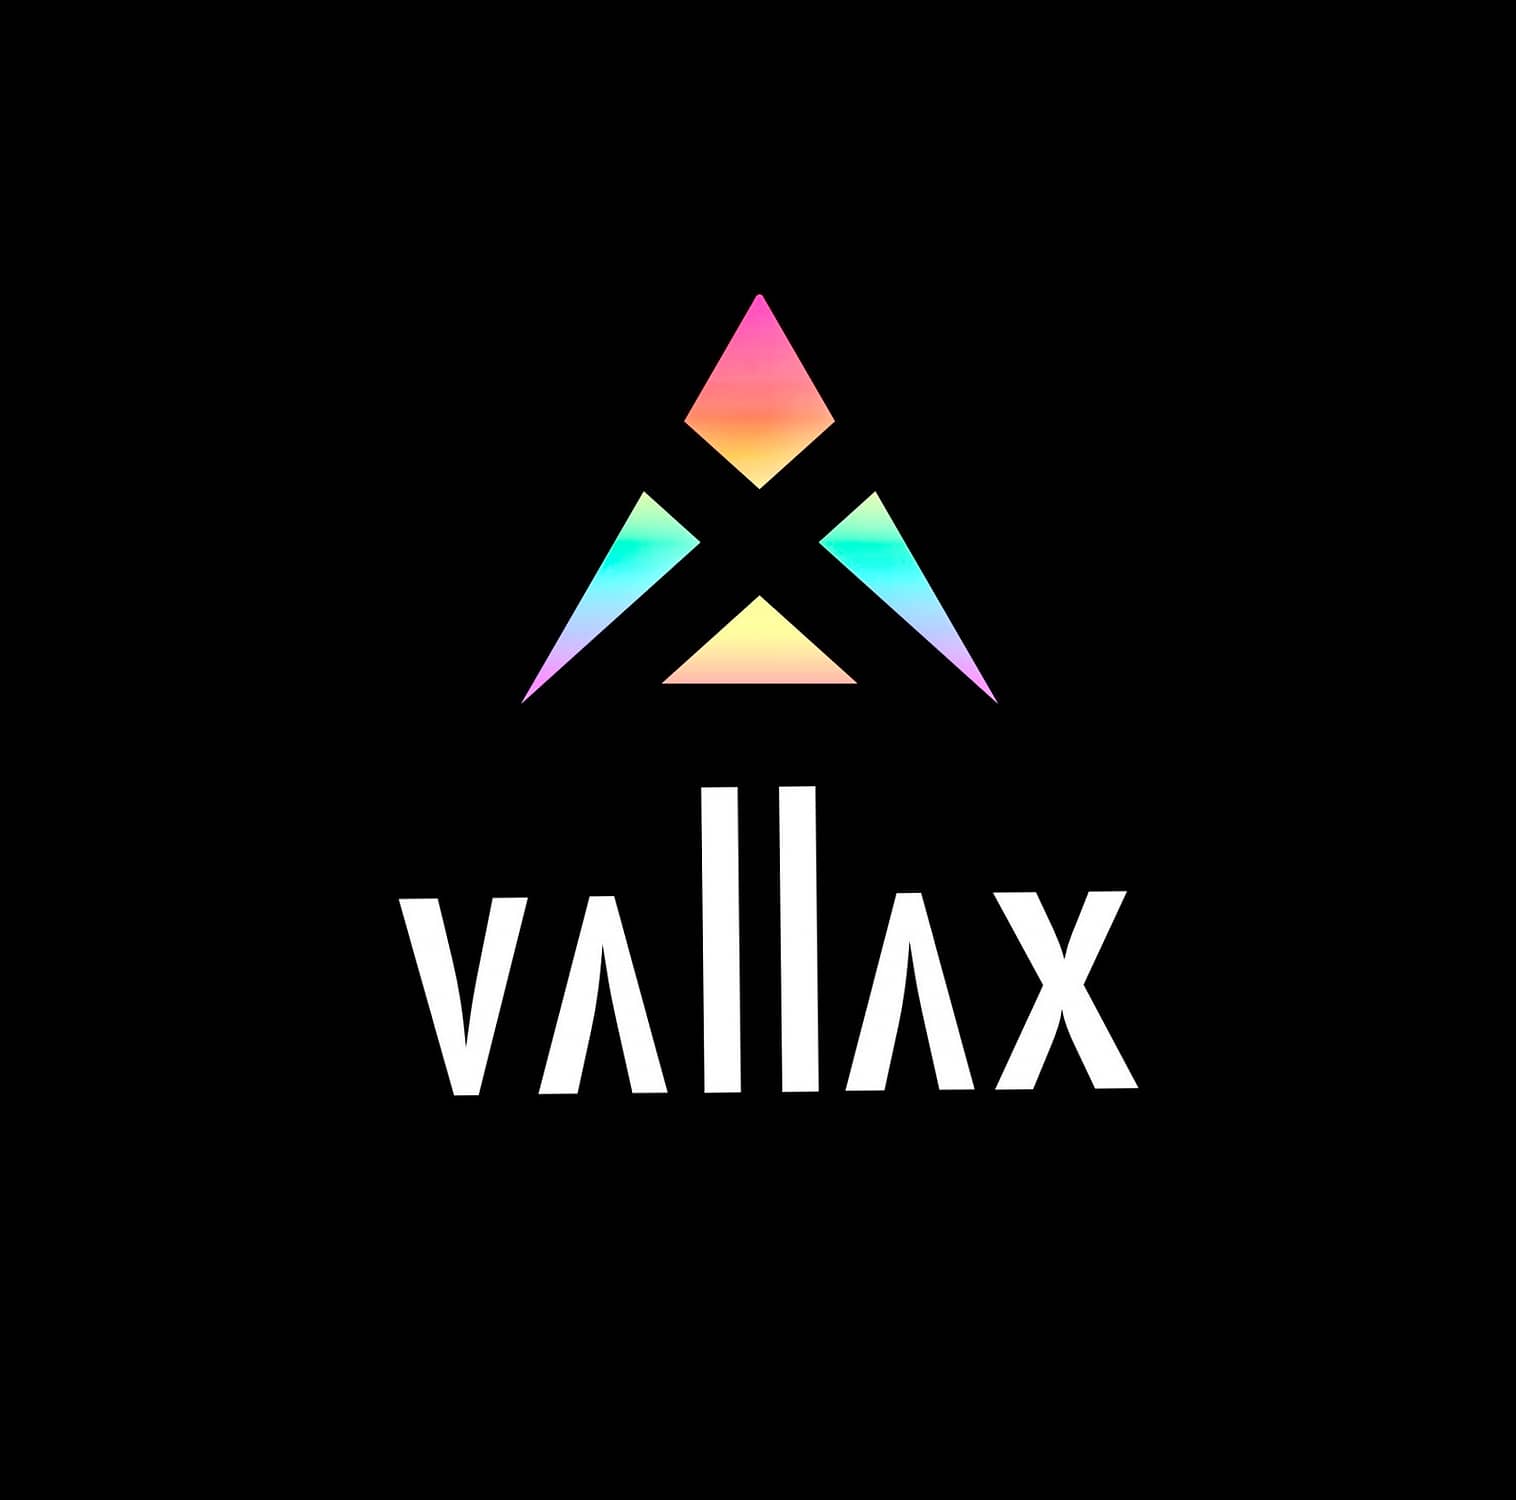 Vallax logo vertical - Graphics